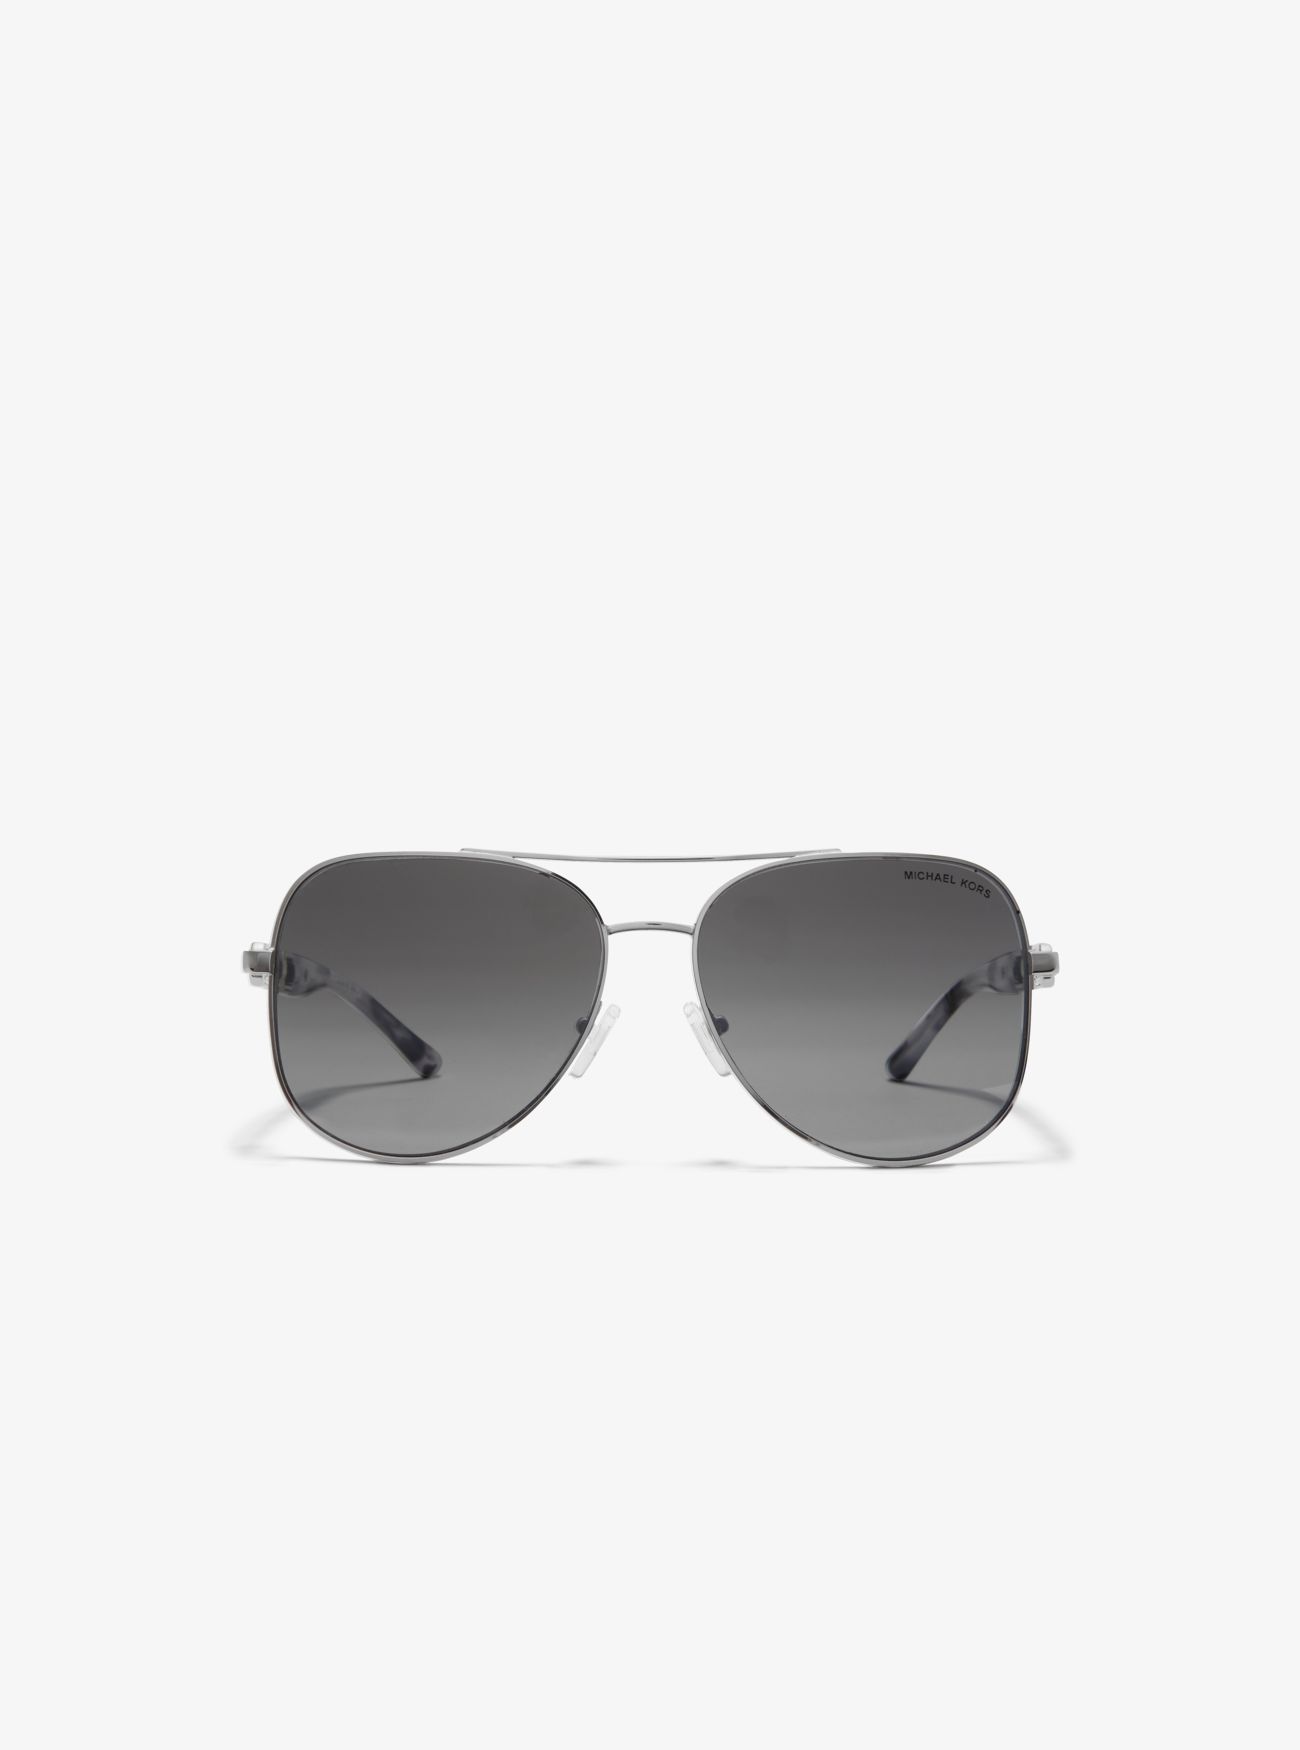 MK Chianti Sunglasses - Silver - Michael Kors